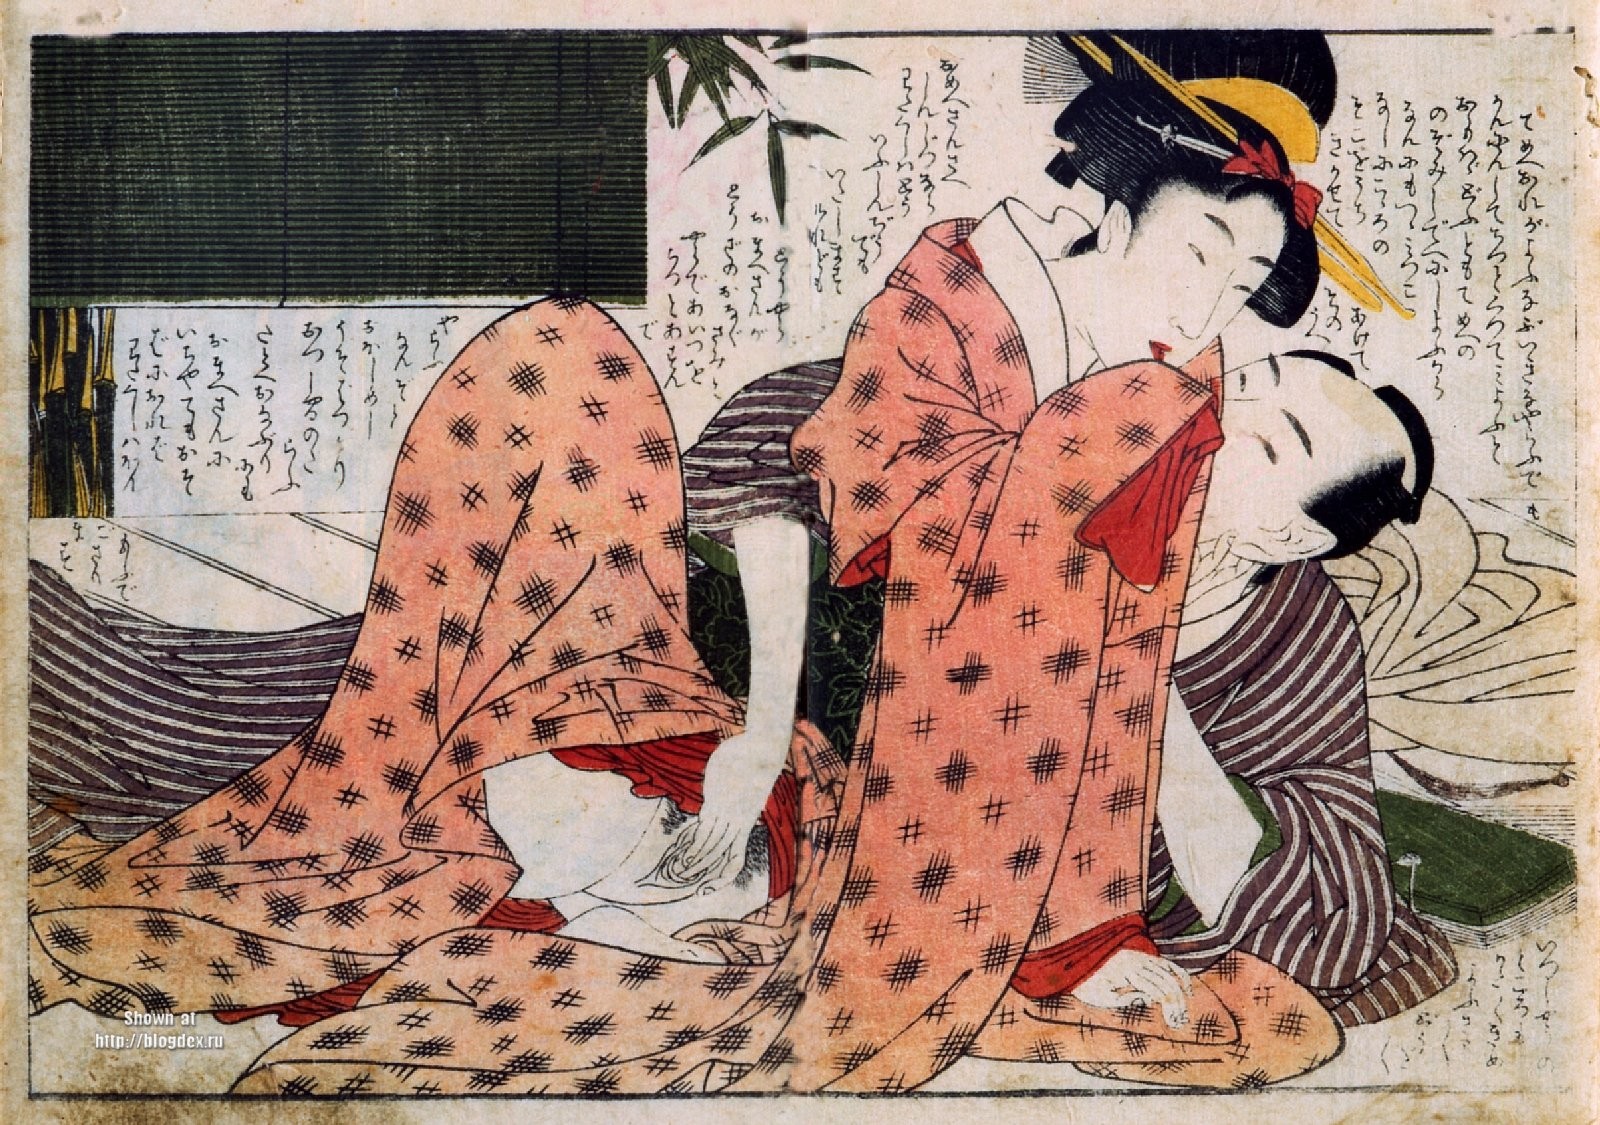 Japanese Art Porno - Porn Art image #174575